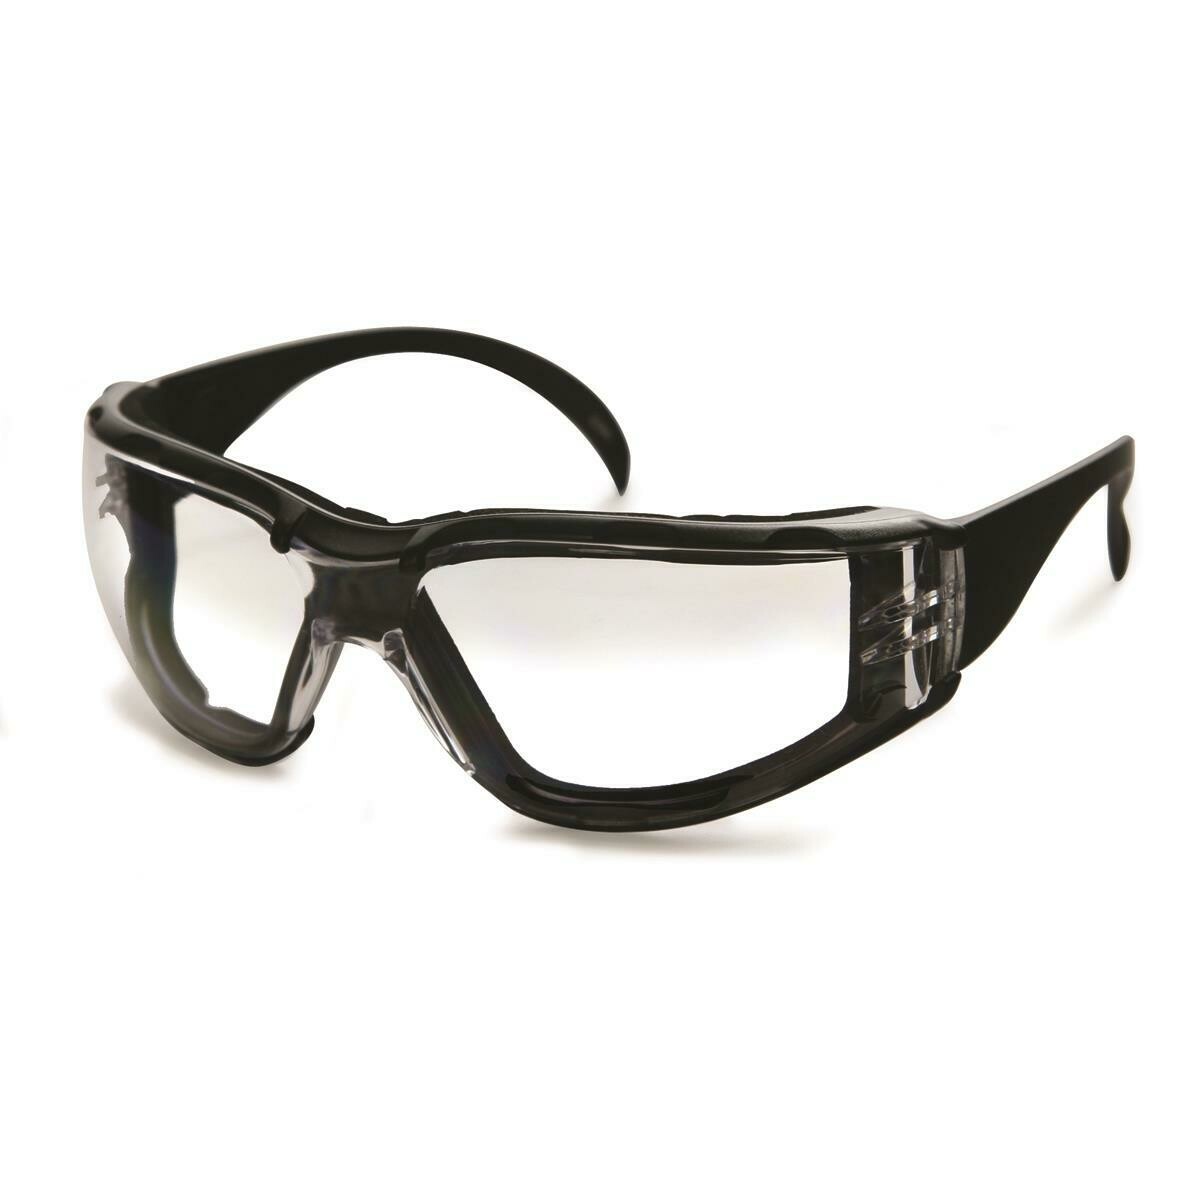 Dentec Safety Glasses - 12E93101DX